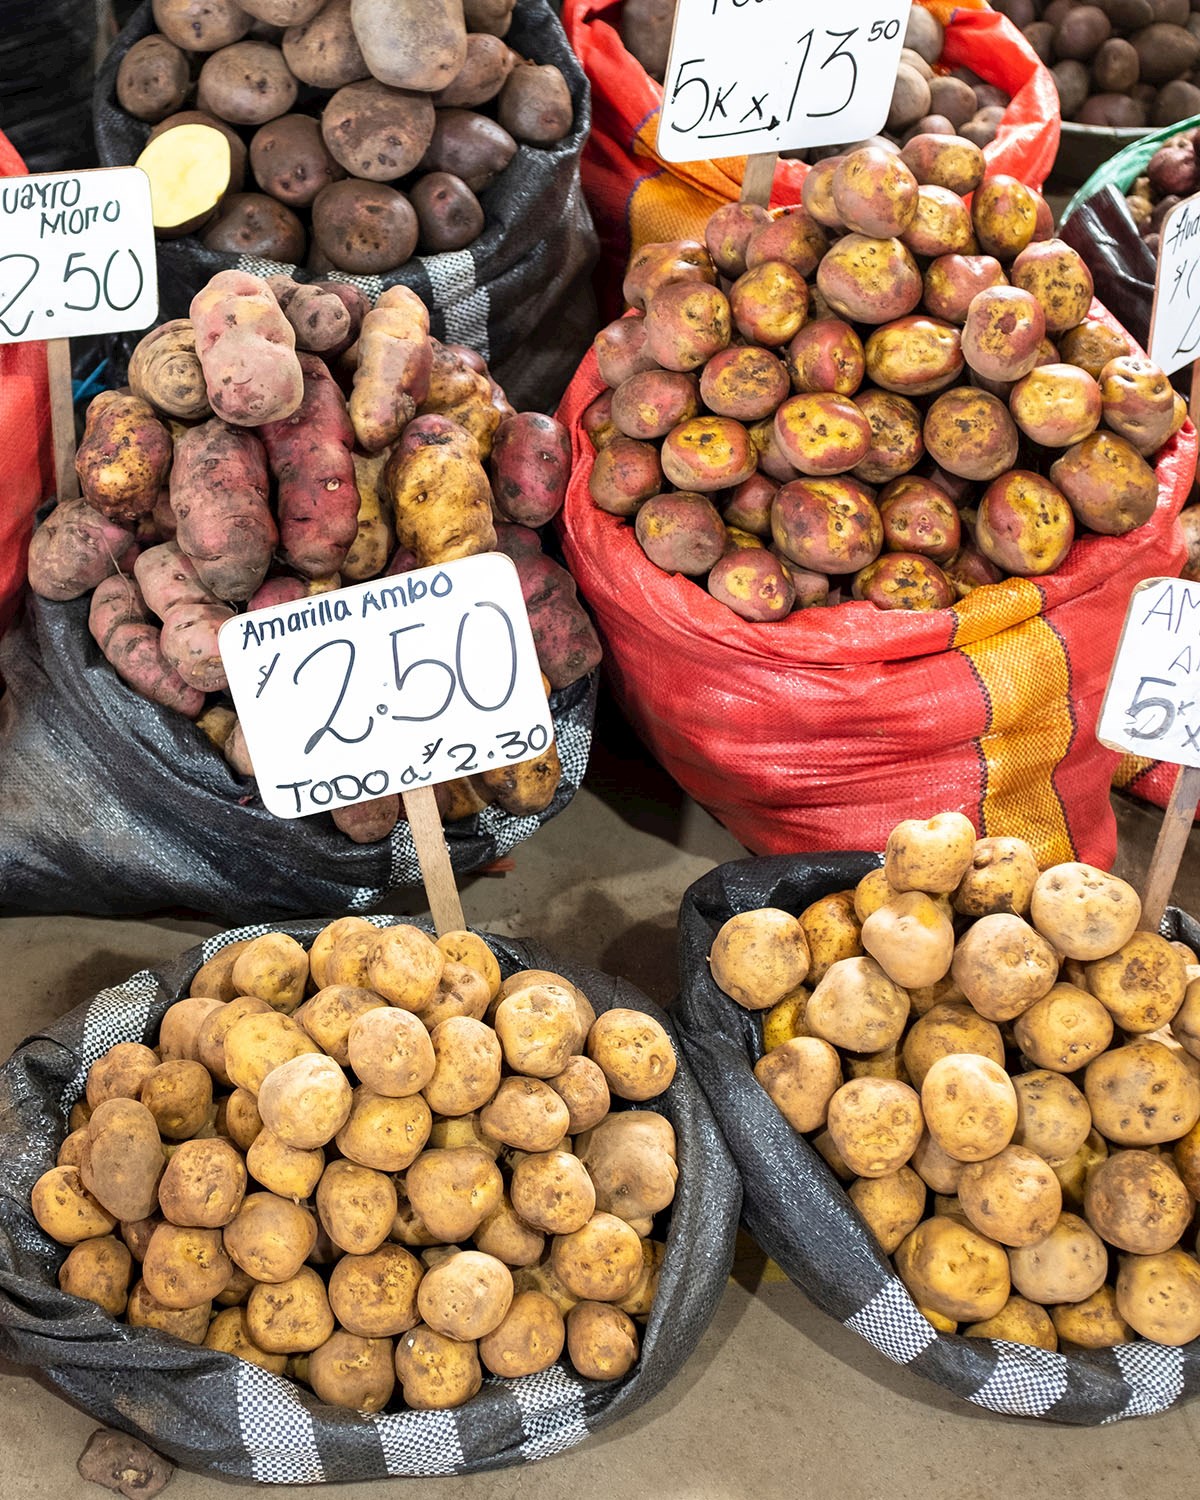 Just a few of about 4,000 Peruvian potato varieties - 